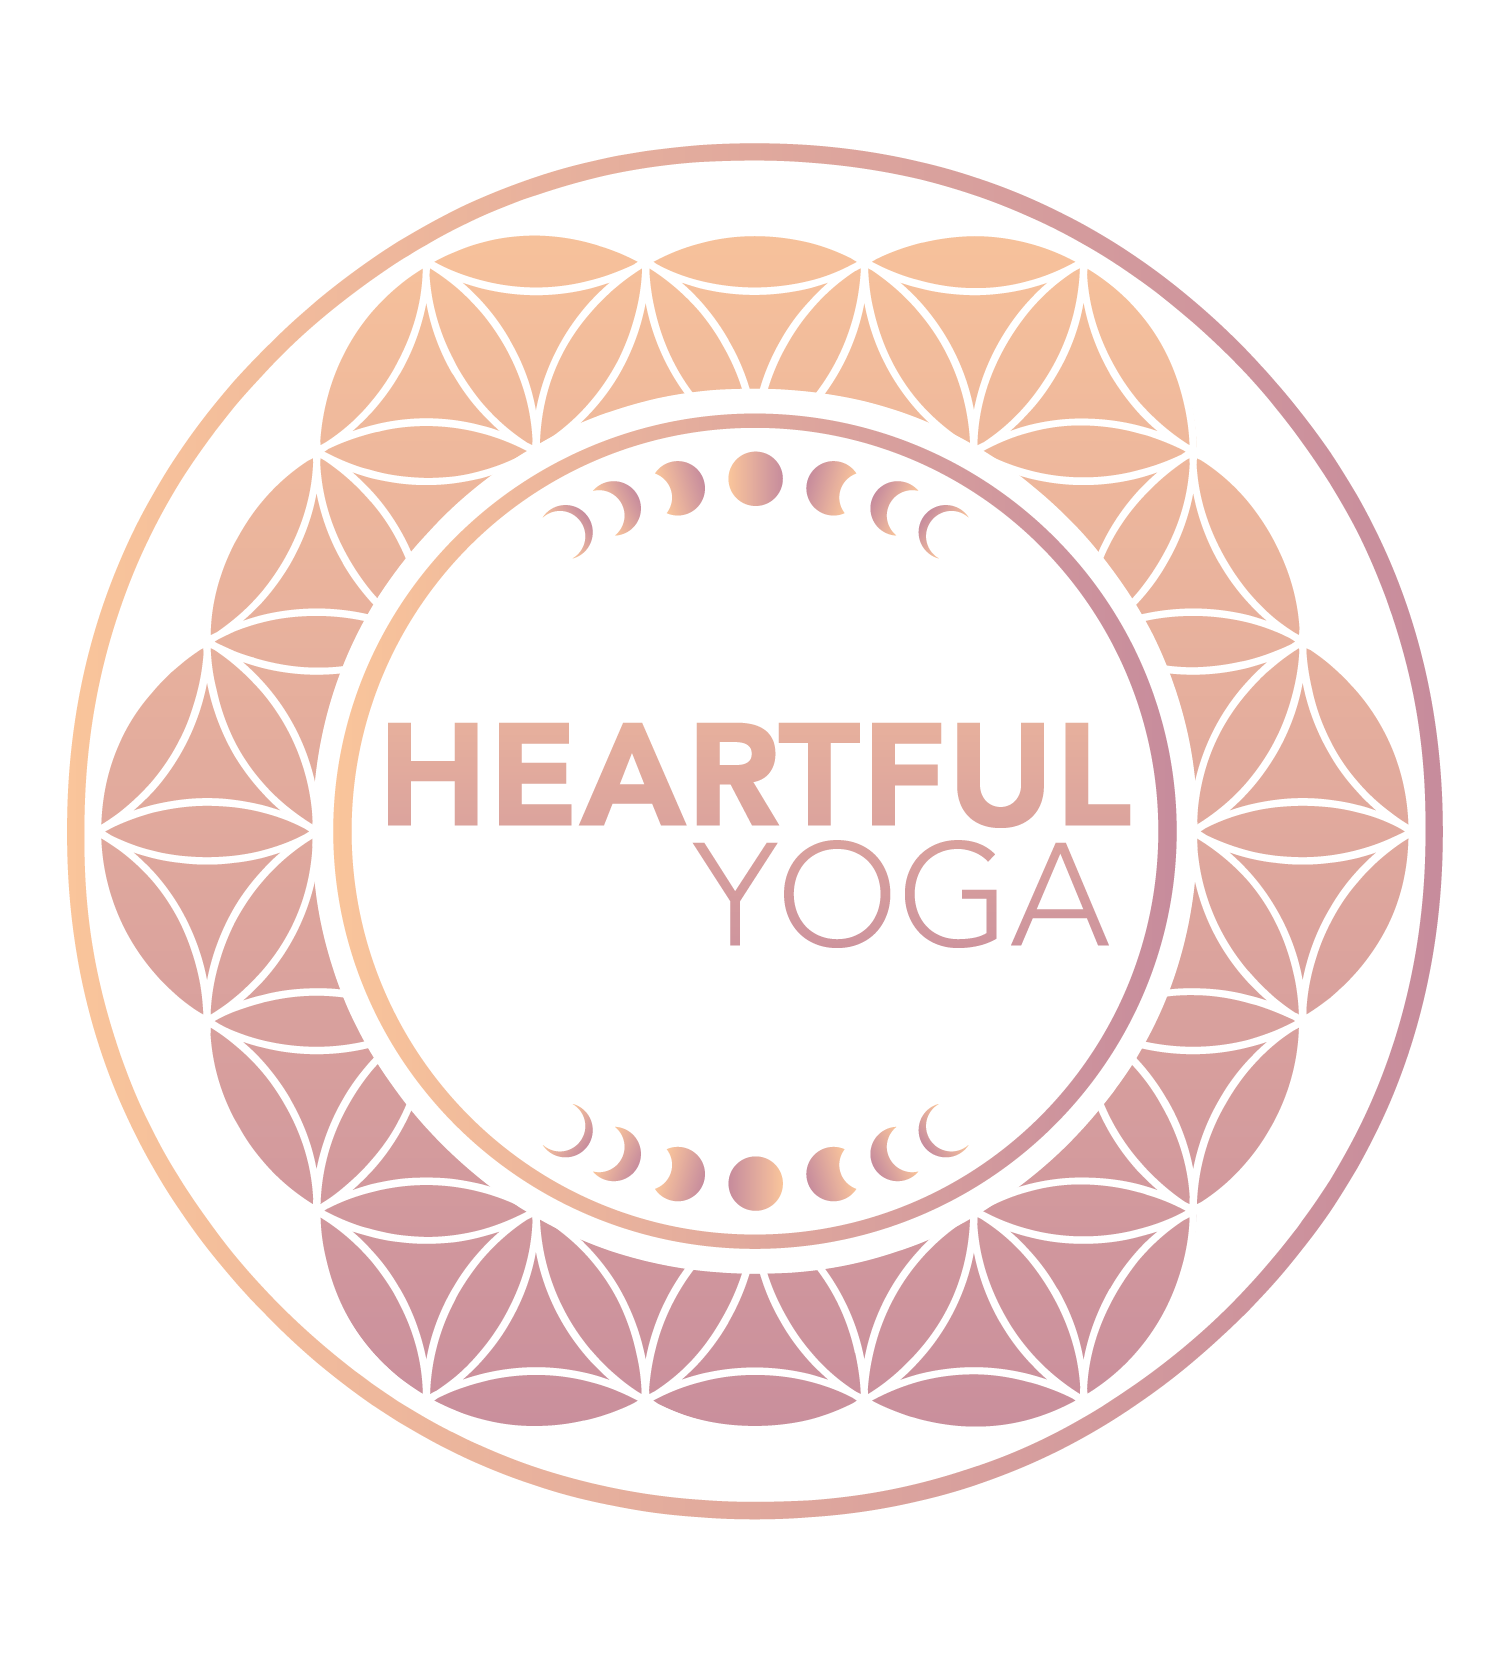 Heartful Yoga & Healing